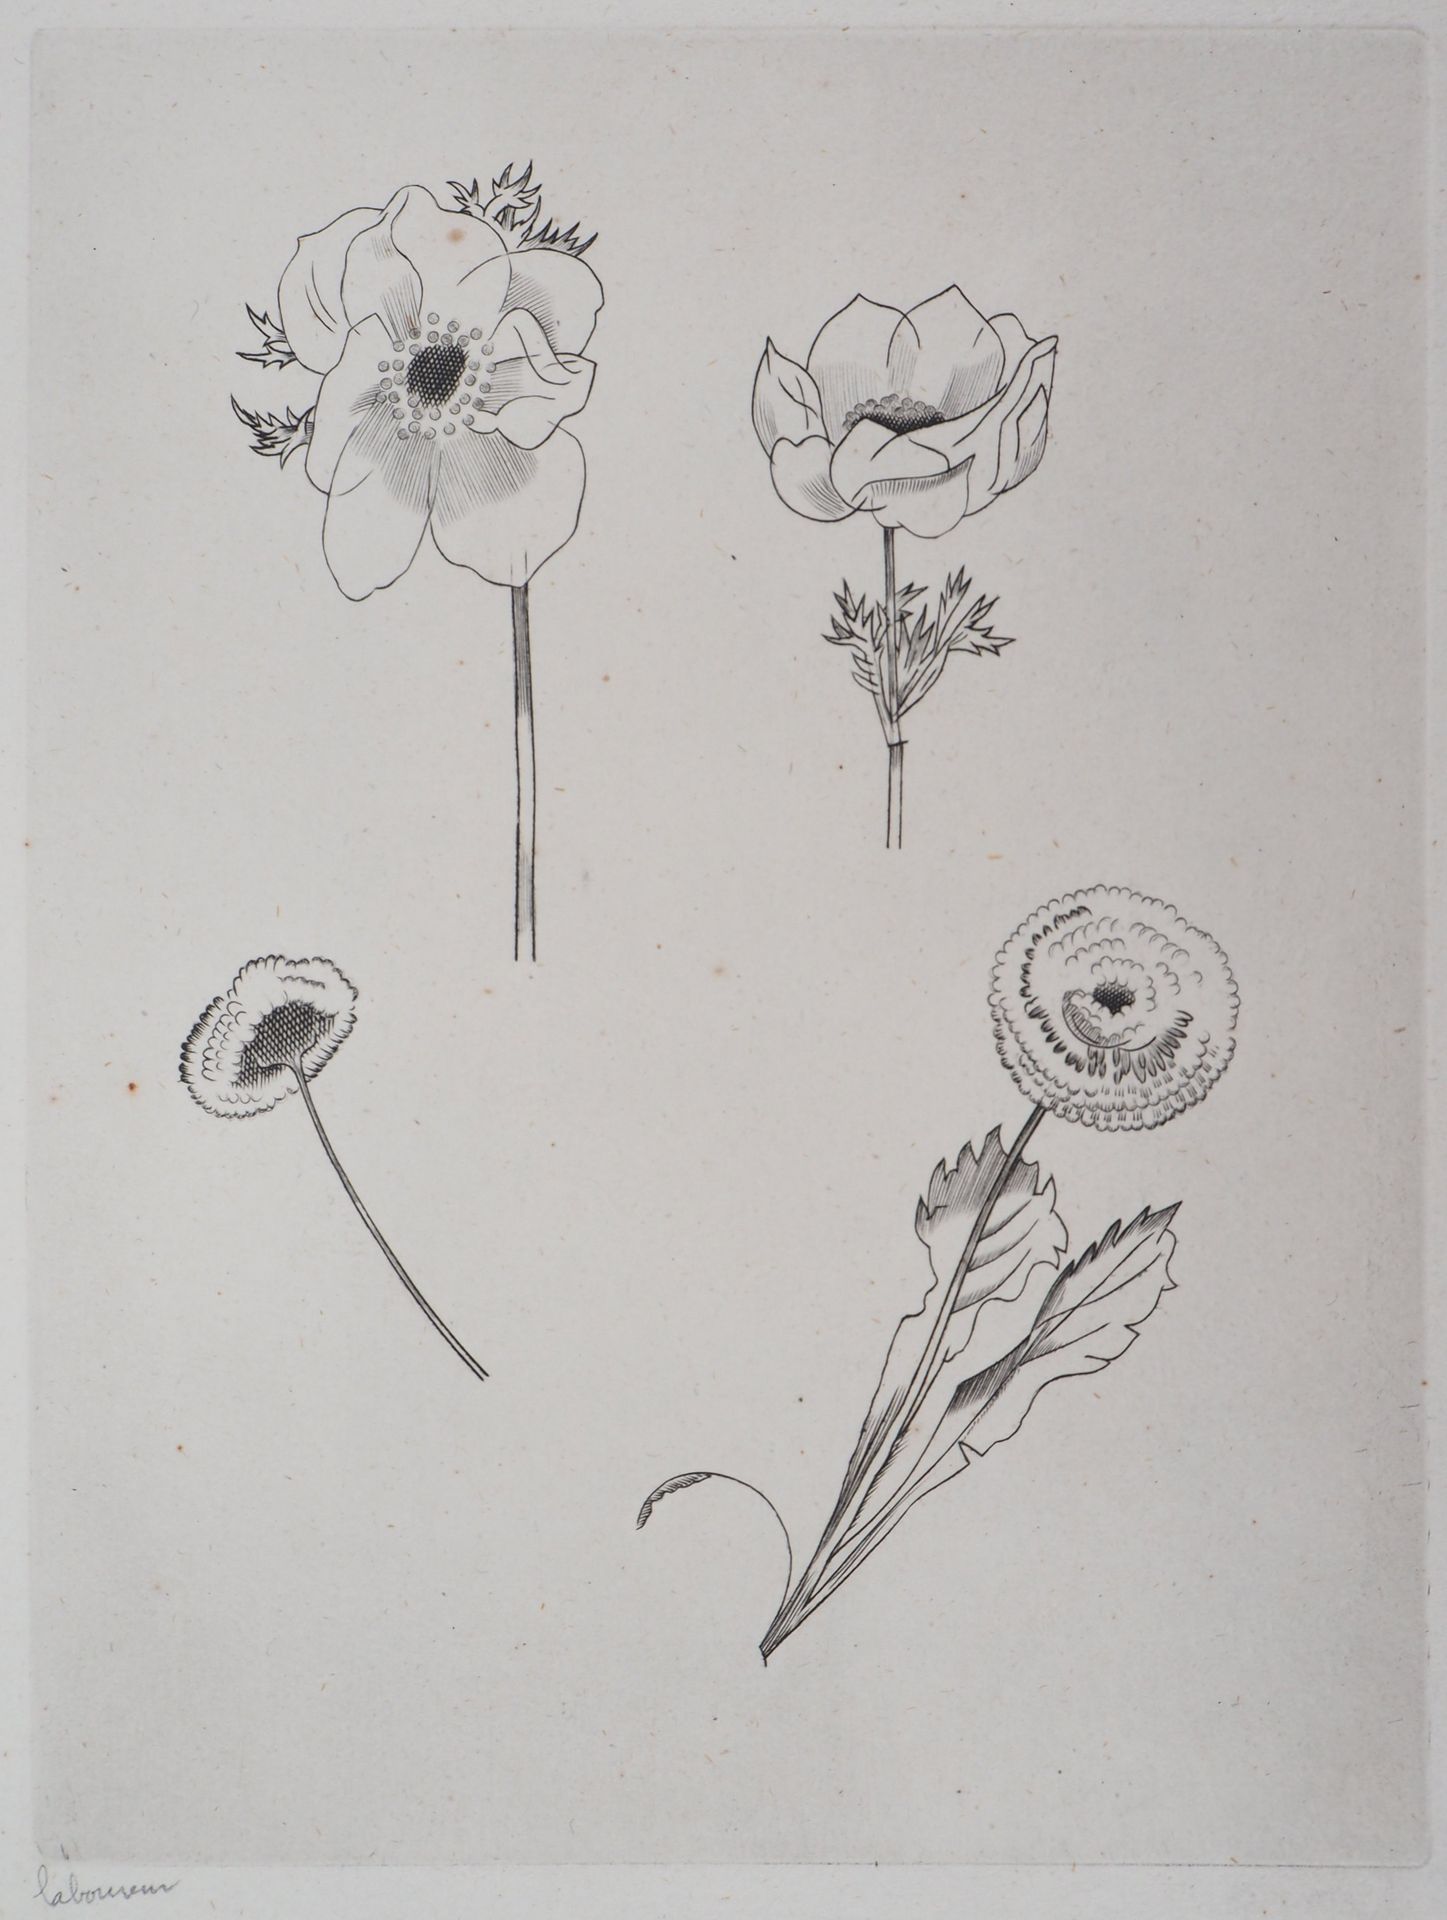 Jean-Emile LABOUREUR Jean Émile LABOUREUR

花卉研究，1930年

原始蚀刻画

左下方有铅笔签名

画在纸上 26 &hellip;